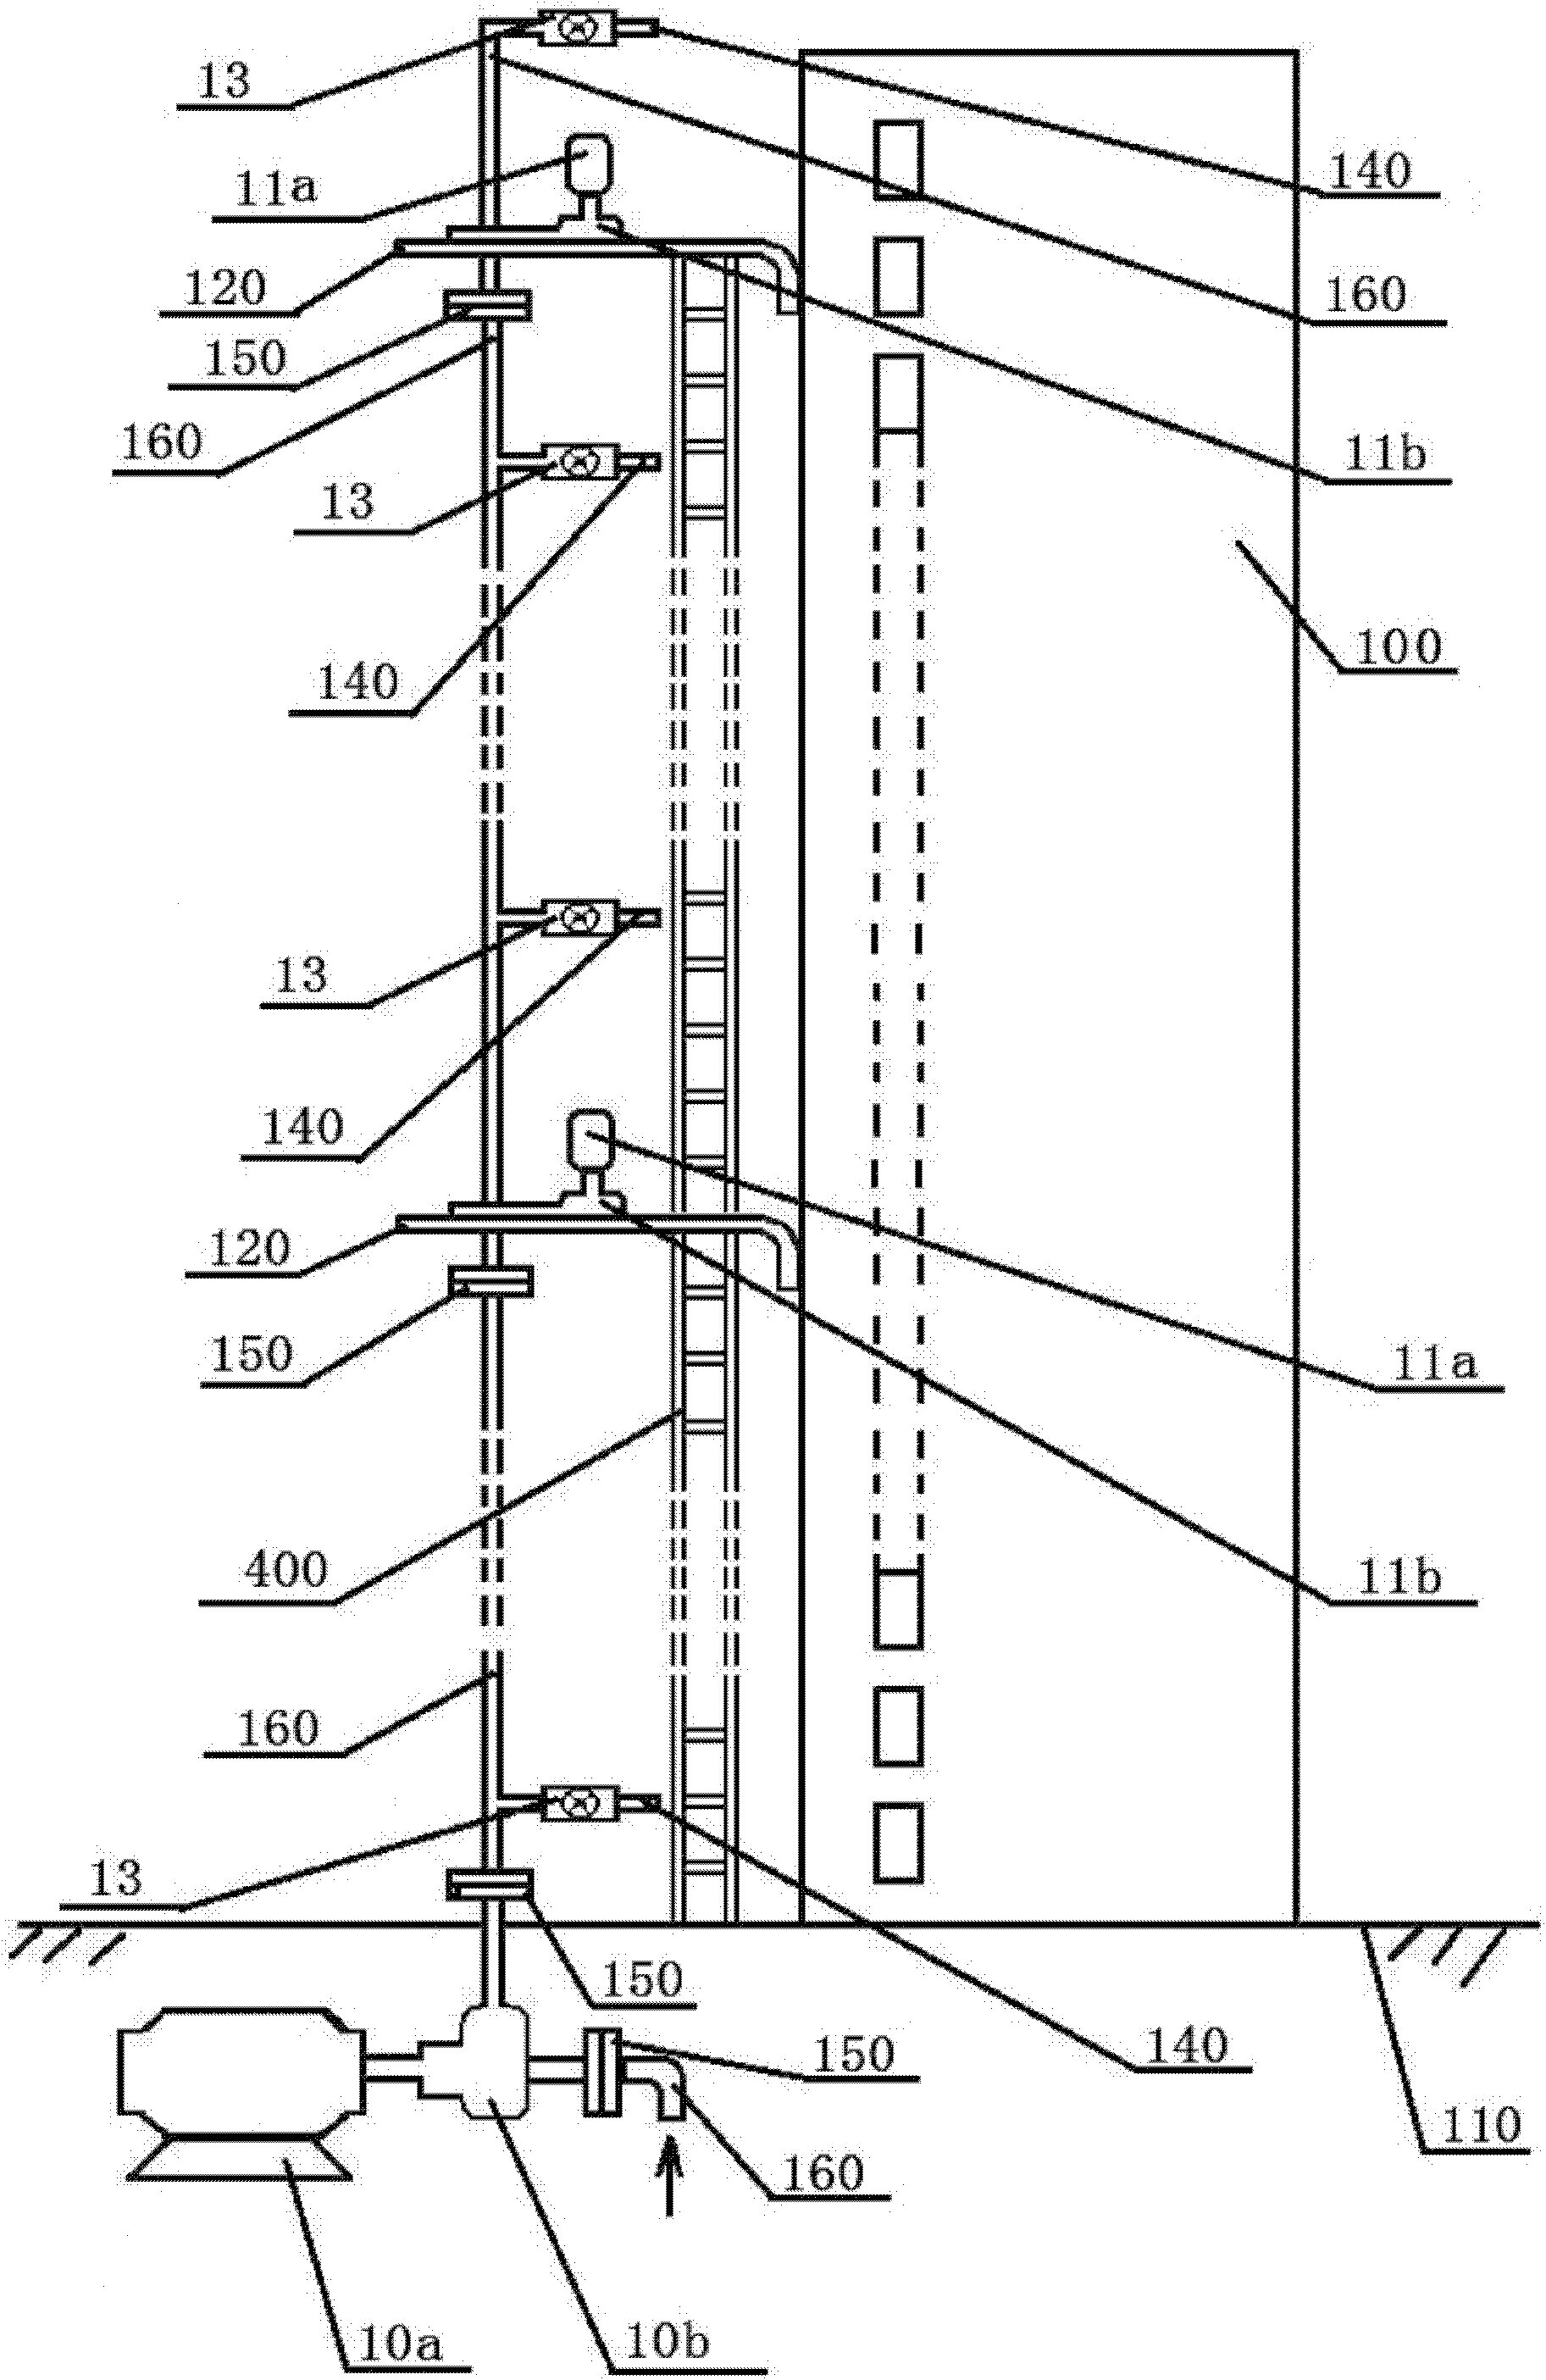 Sub-super linear array relay pump system